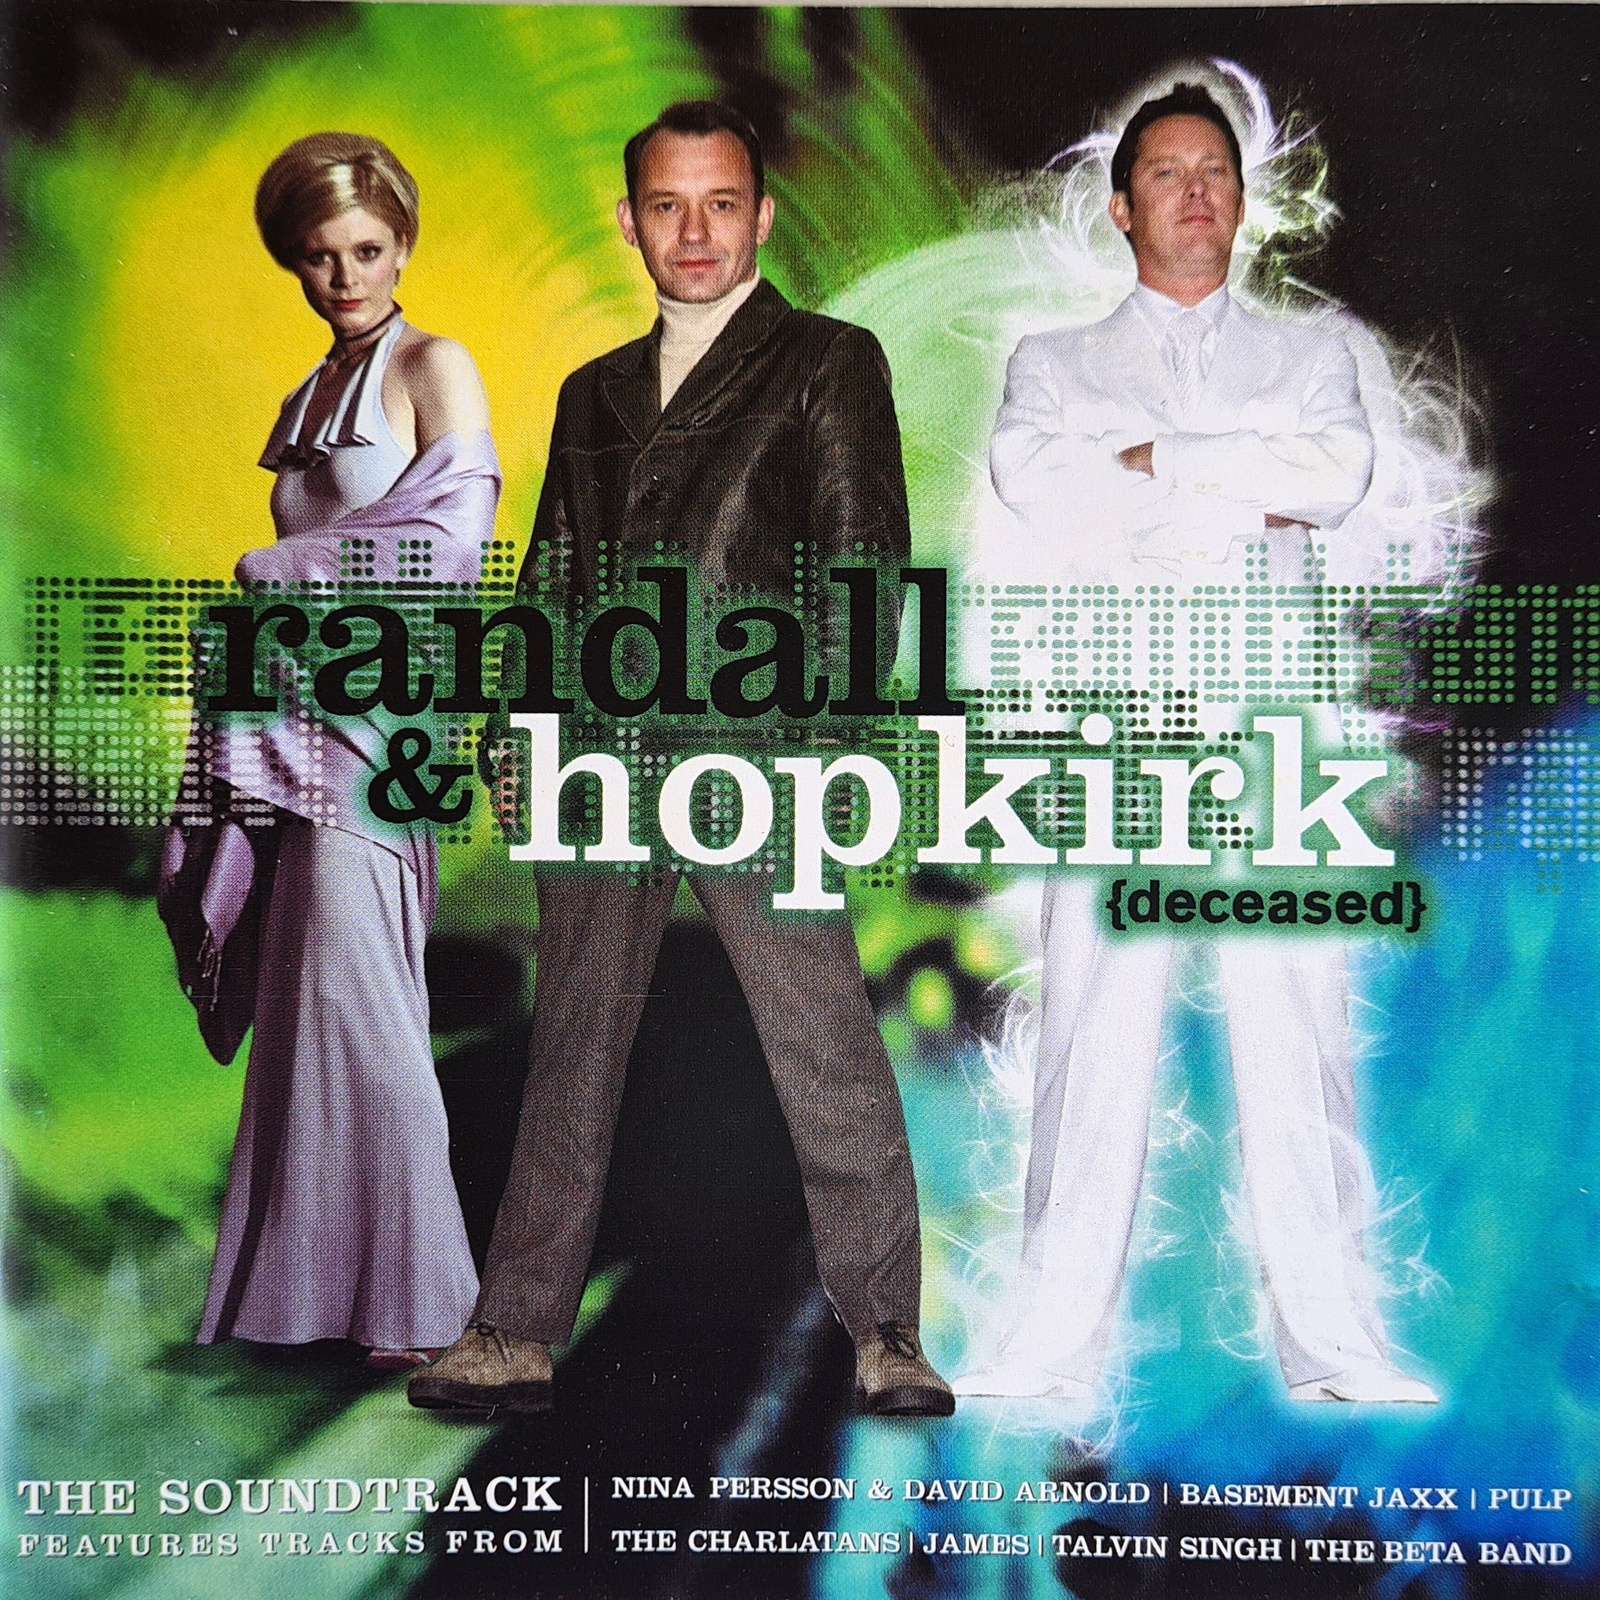 Randall & Hopkirk (deceased) - The Soundtrack (CD)